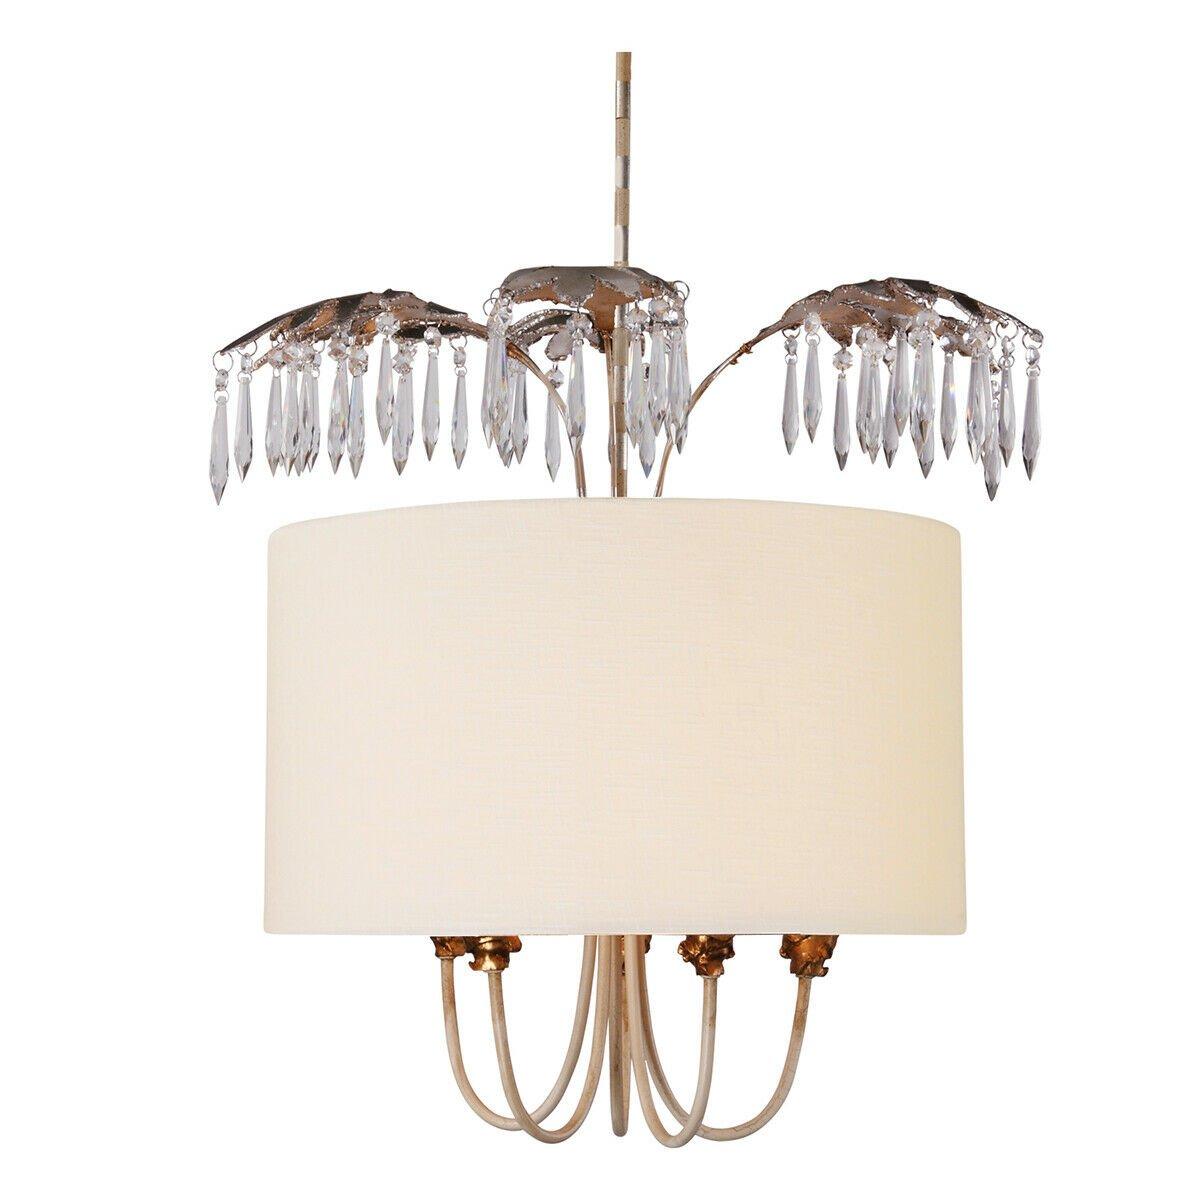 5 Bulb Ceiling Pendant Light Fitting Cream Patina Gold & Silver Leaf LED E14 40W